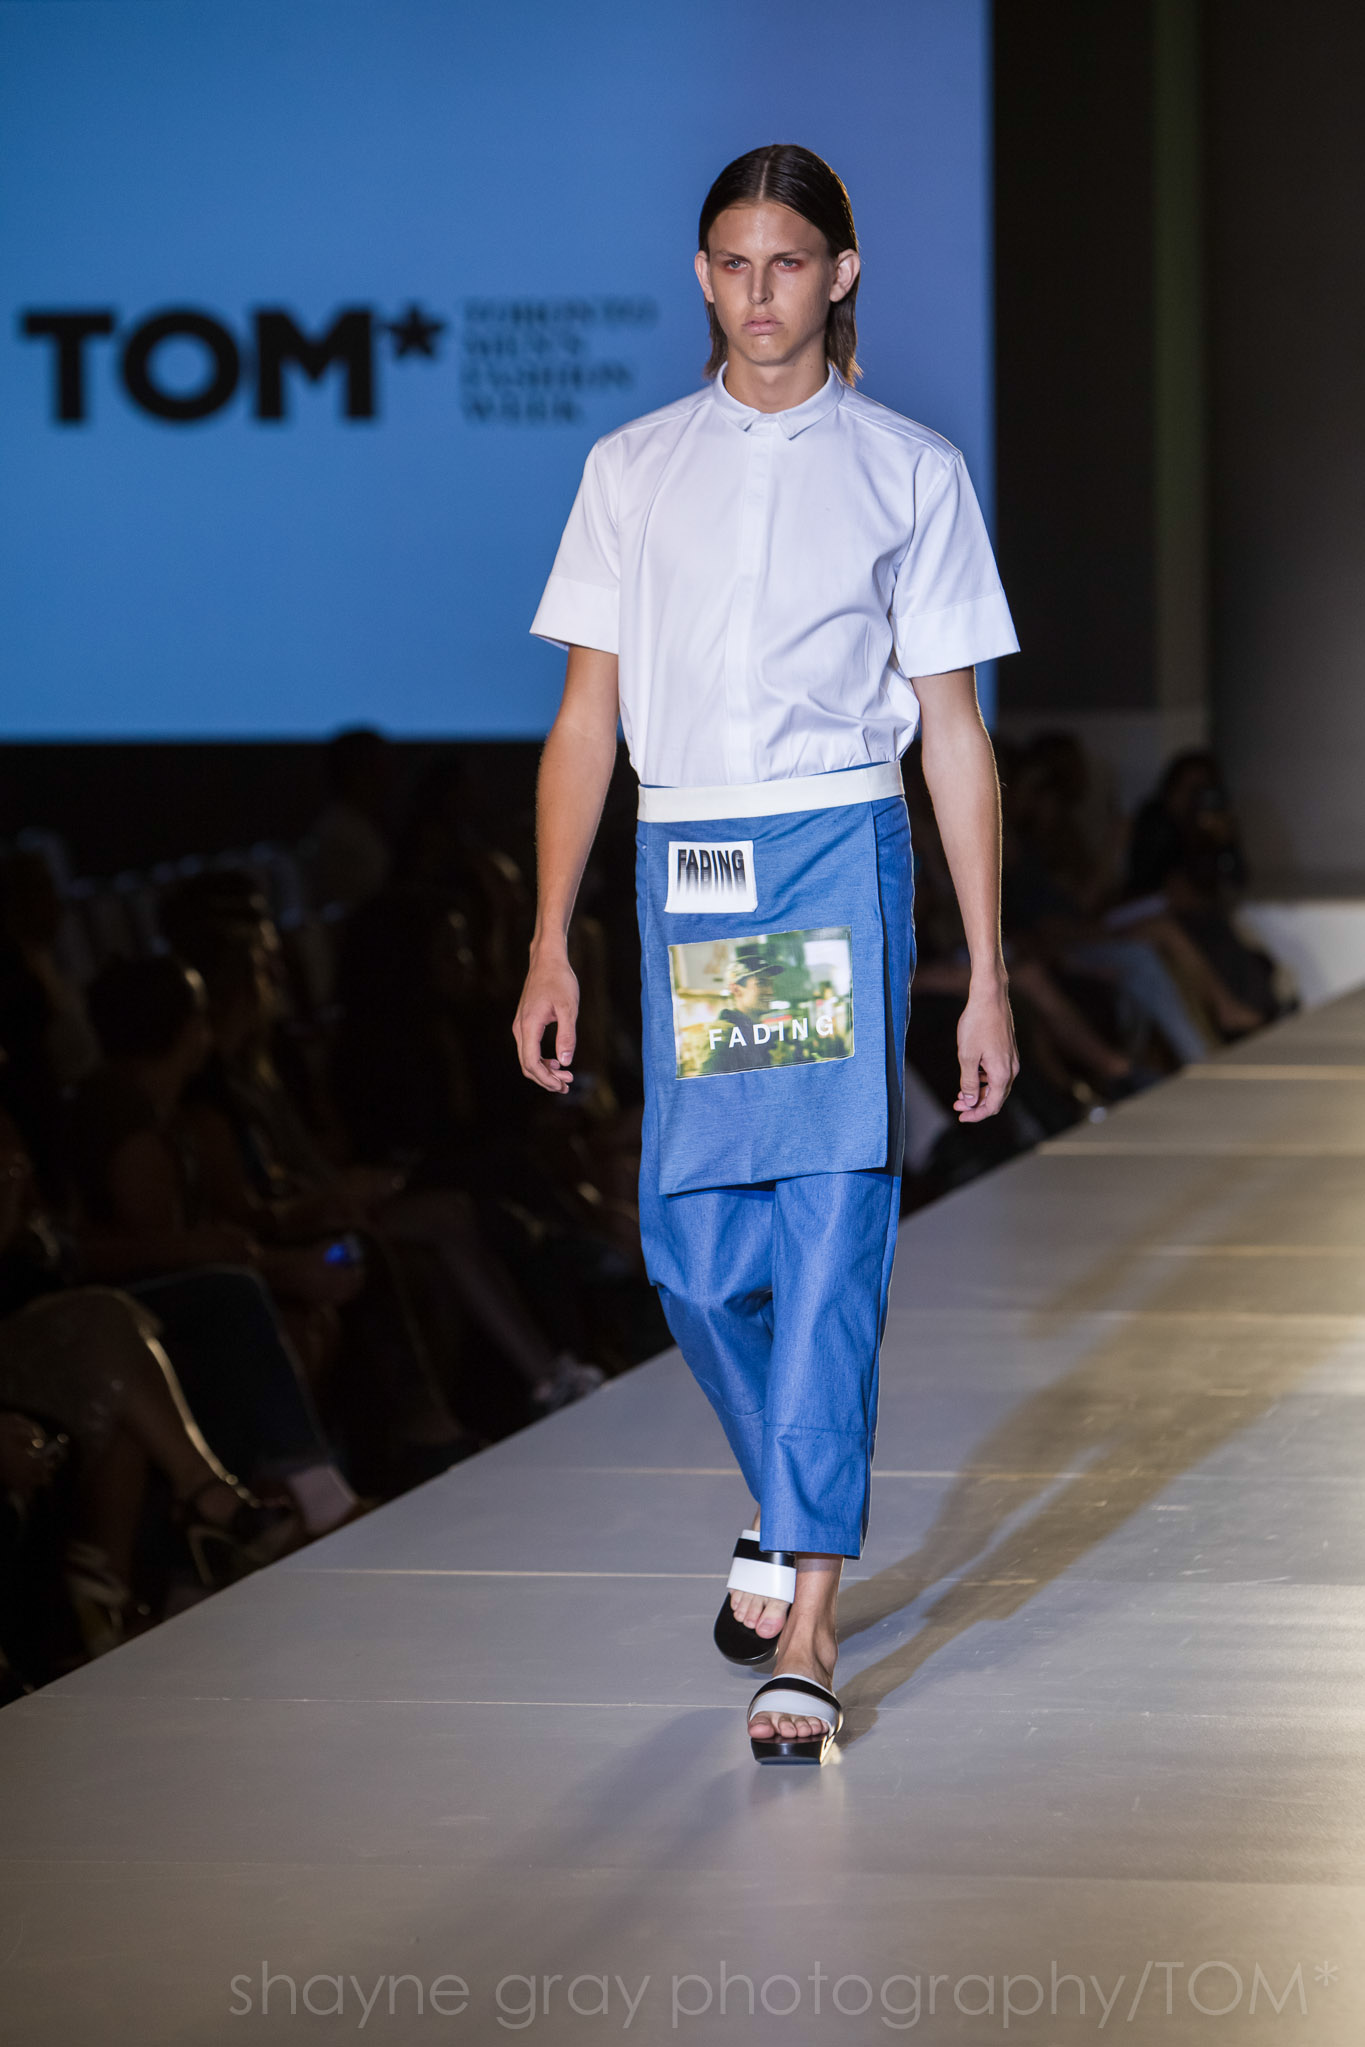 Shayne-Gray-Toronto-men's-fashion_week-TOM-wrkdept-8678.jpg